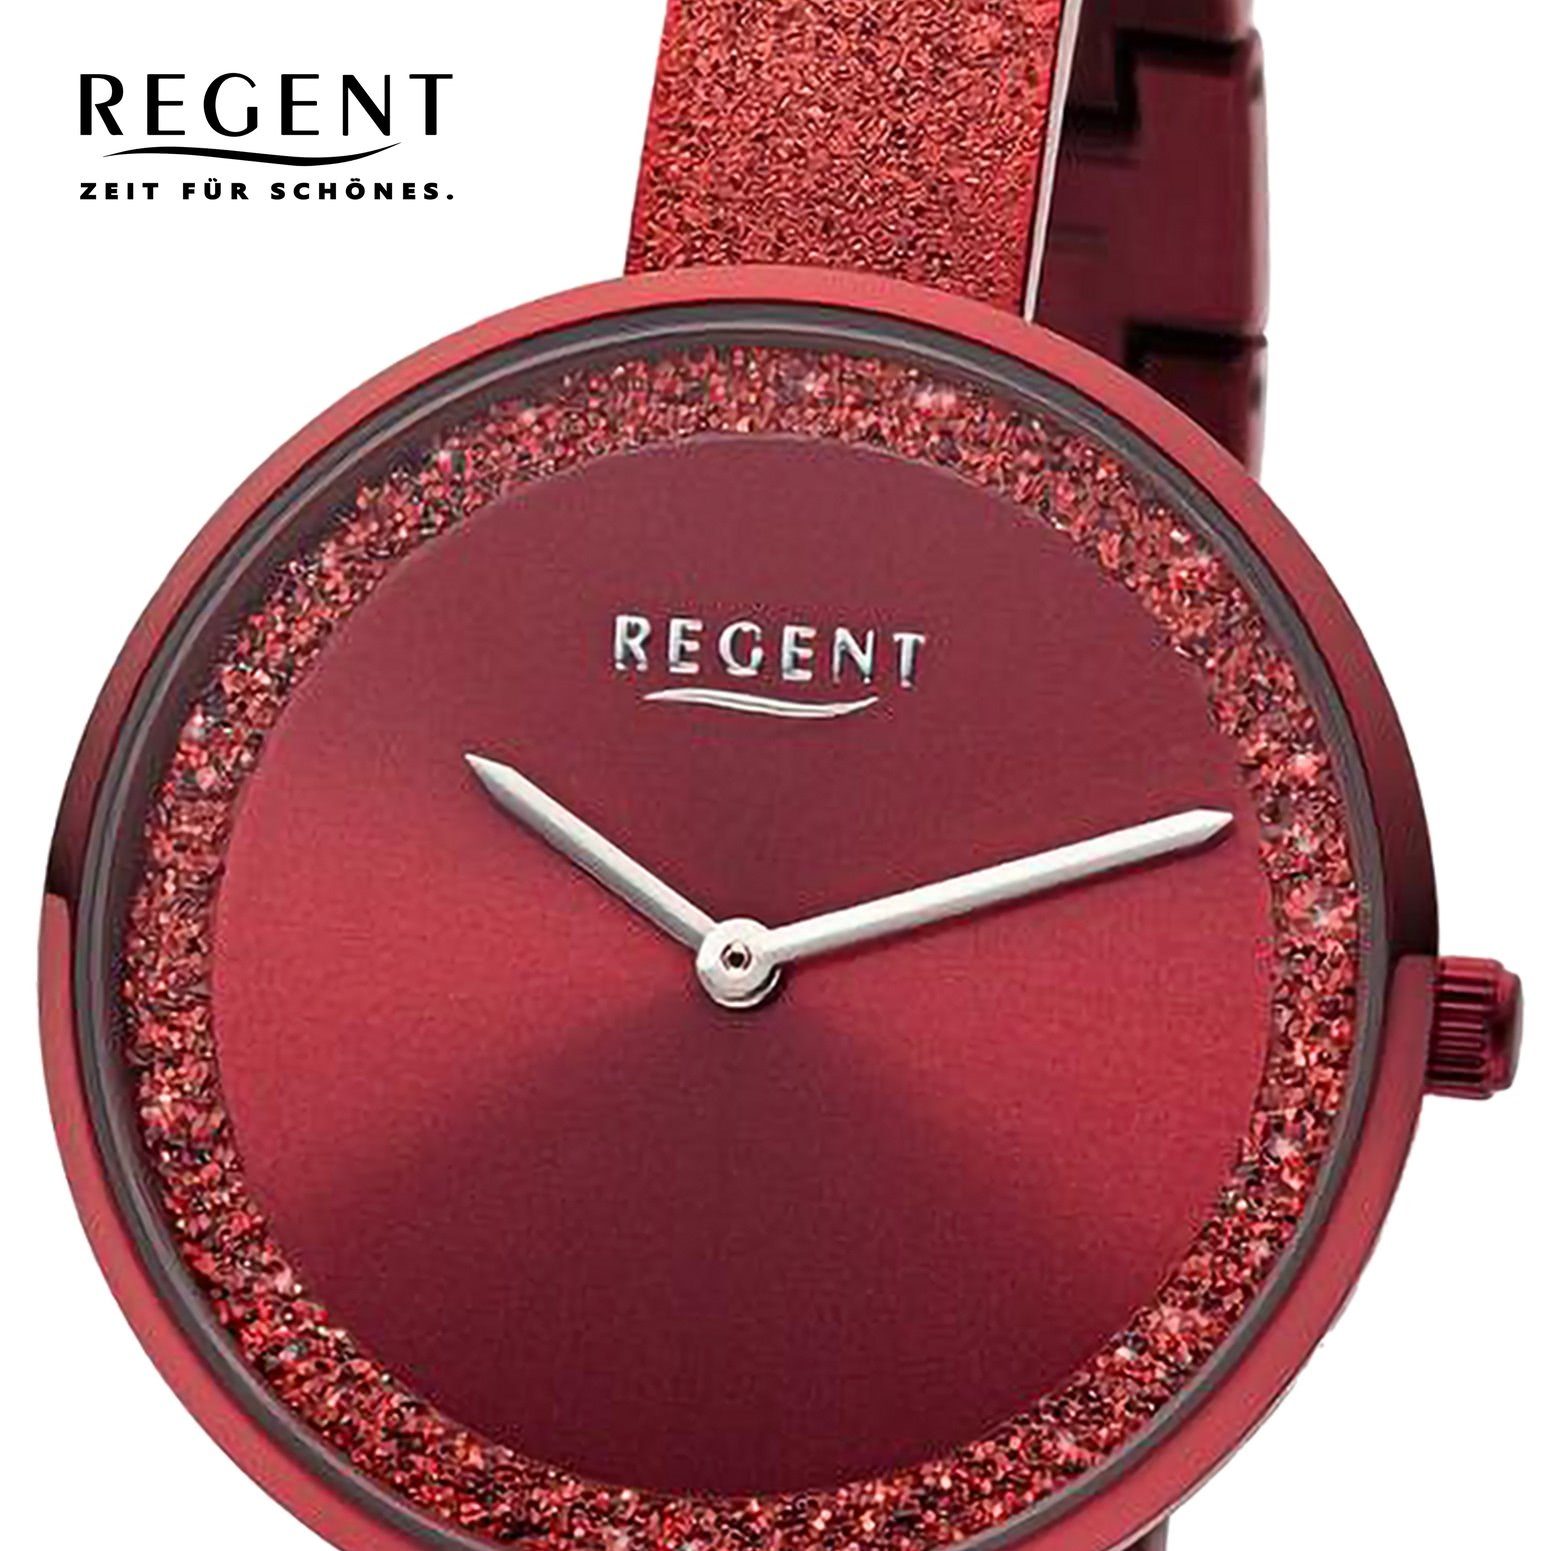 Damen (ca. extra Regent Quarzuhr rund, Damen 34mm), Metallarmband Analog, Regent Armbanduhr groß Armbanduhr